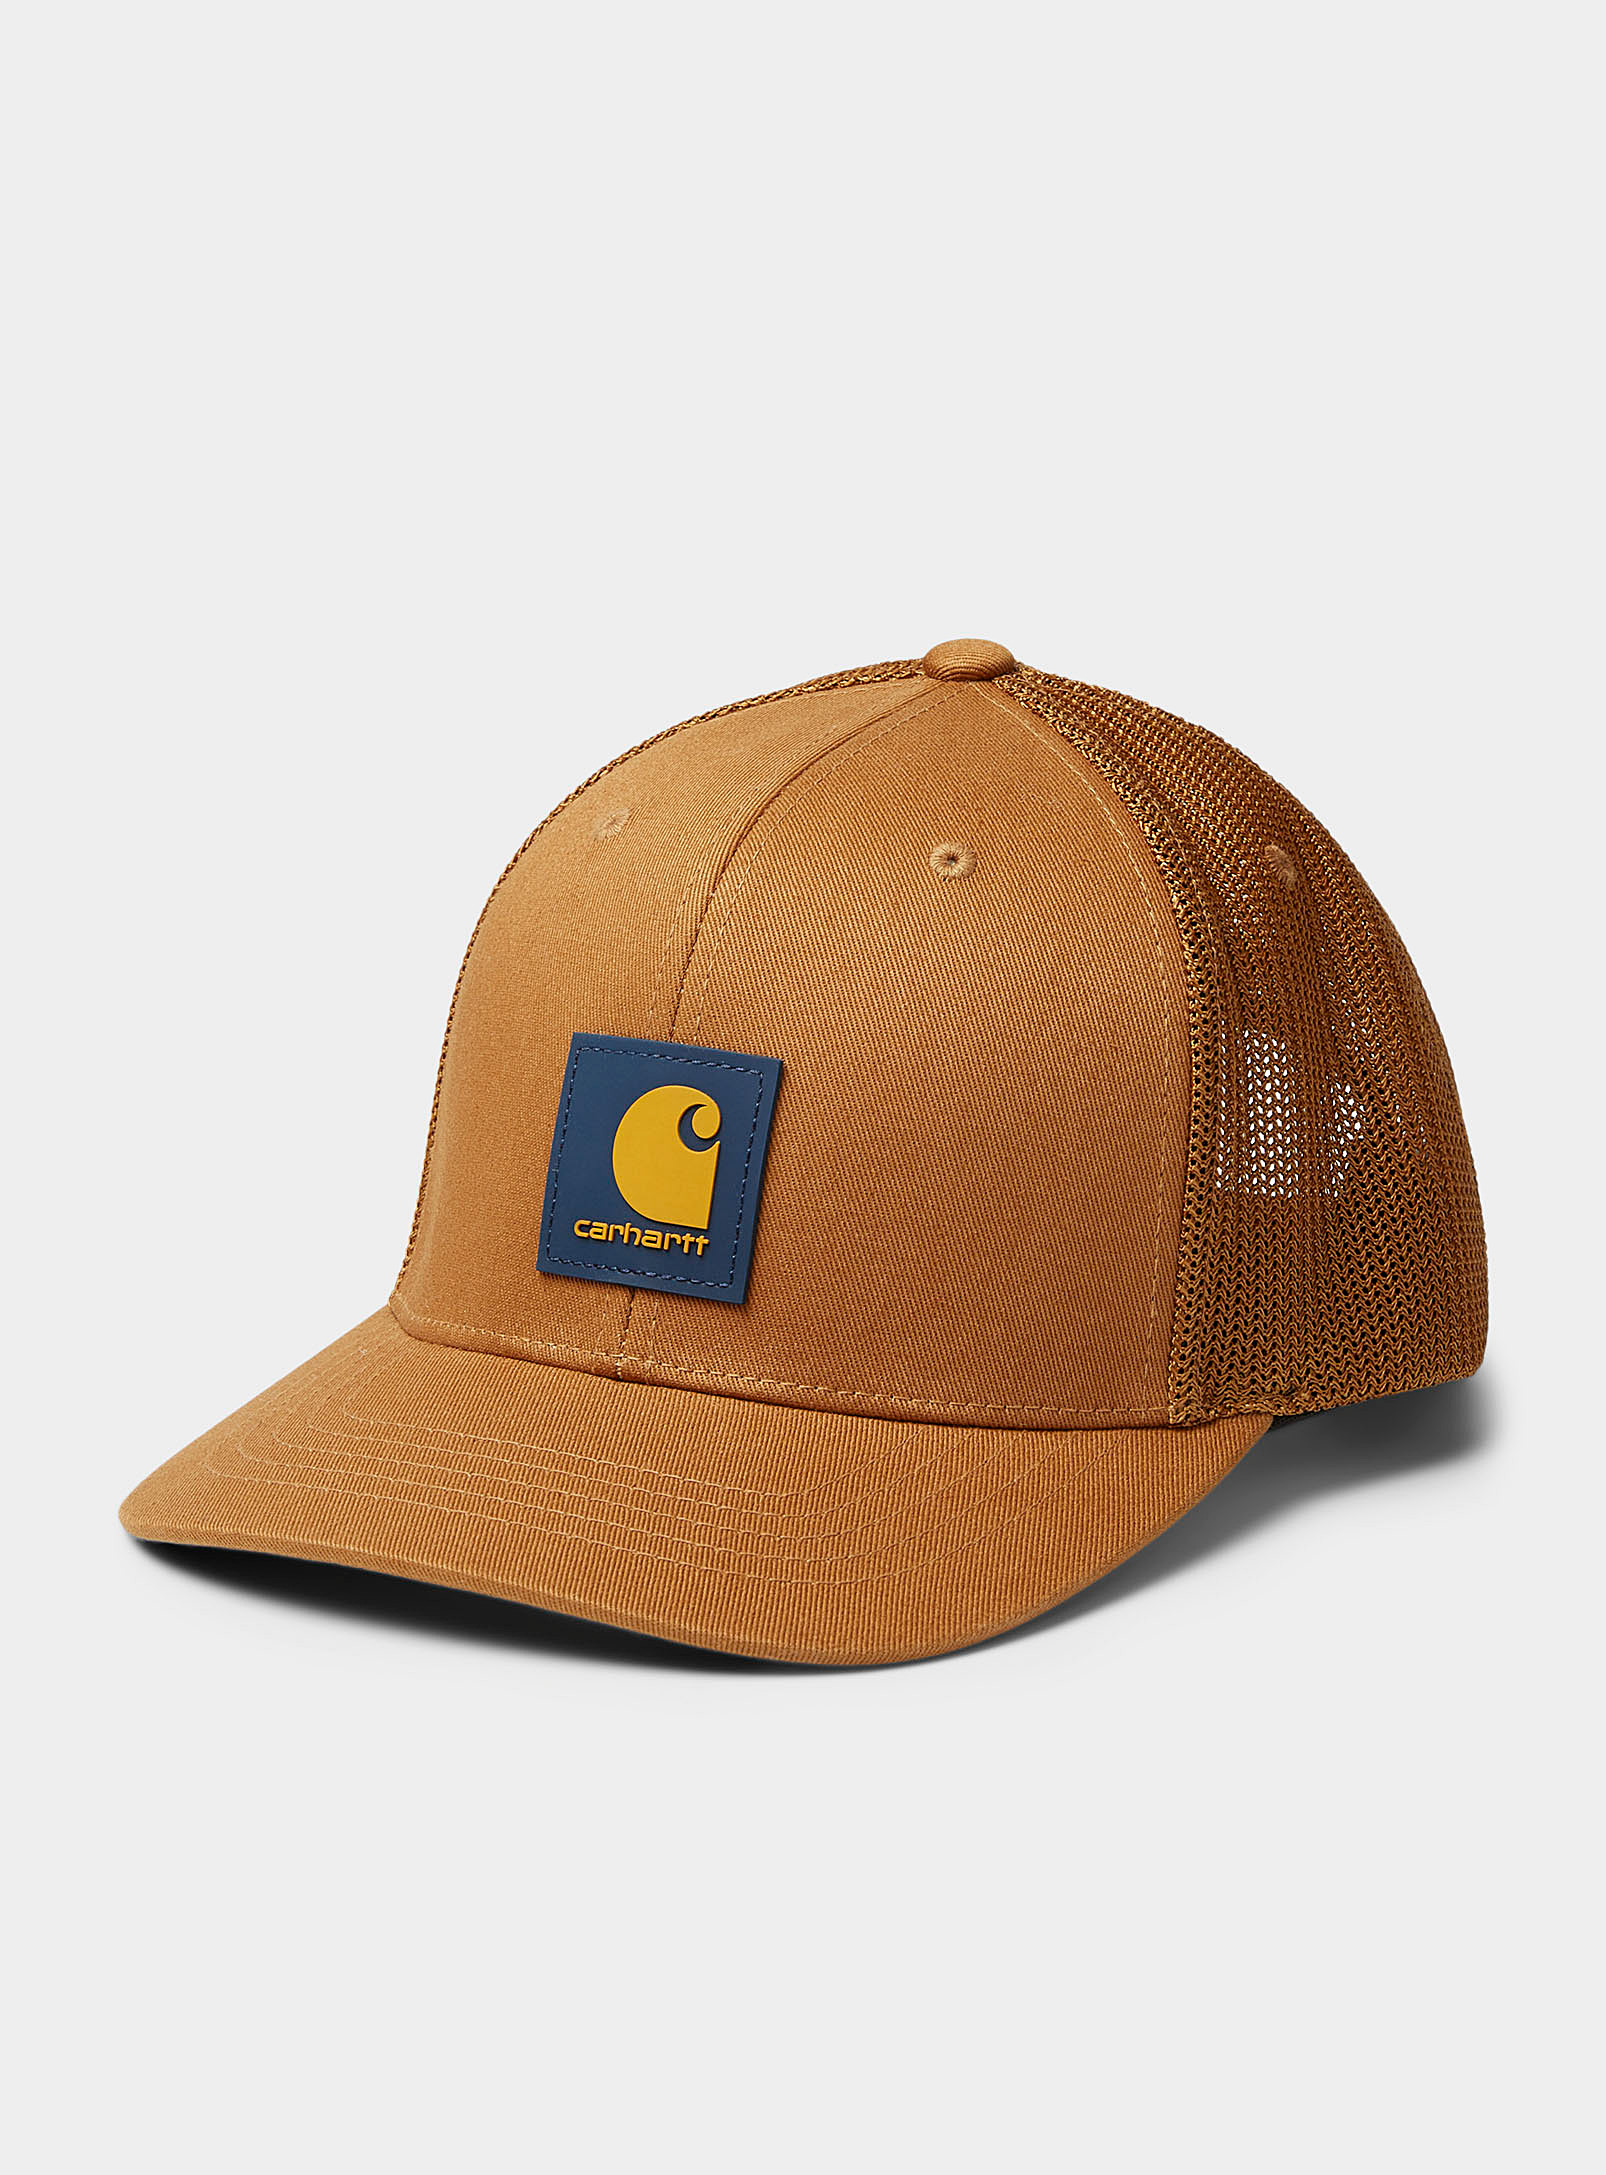 Carhartt Square Logo Trucker Cap In Brown